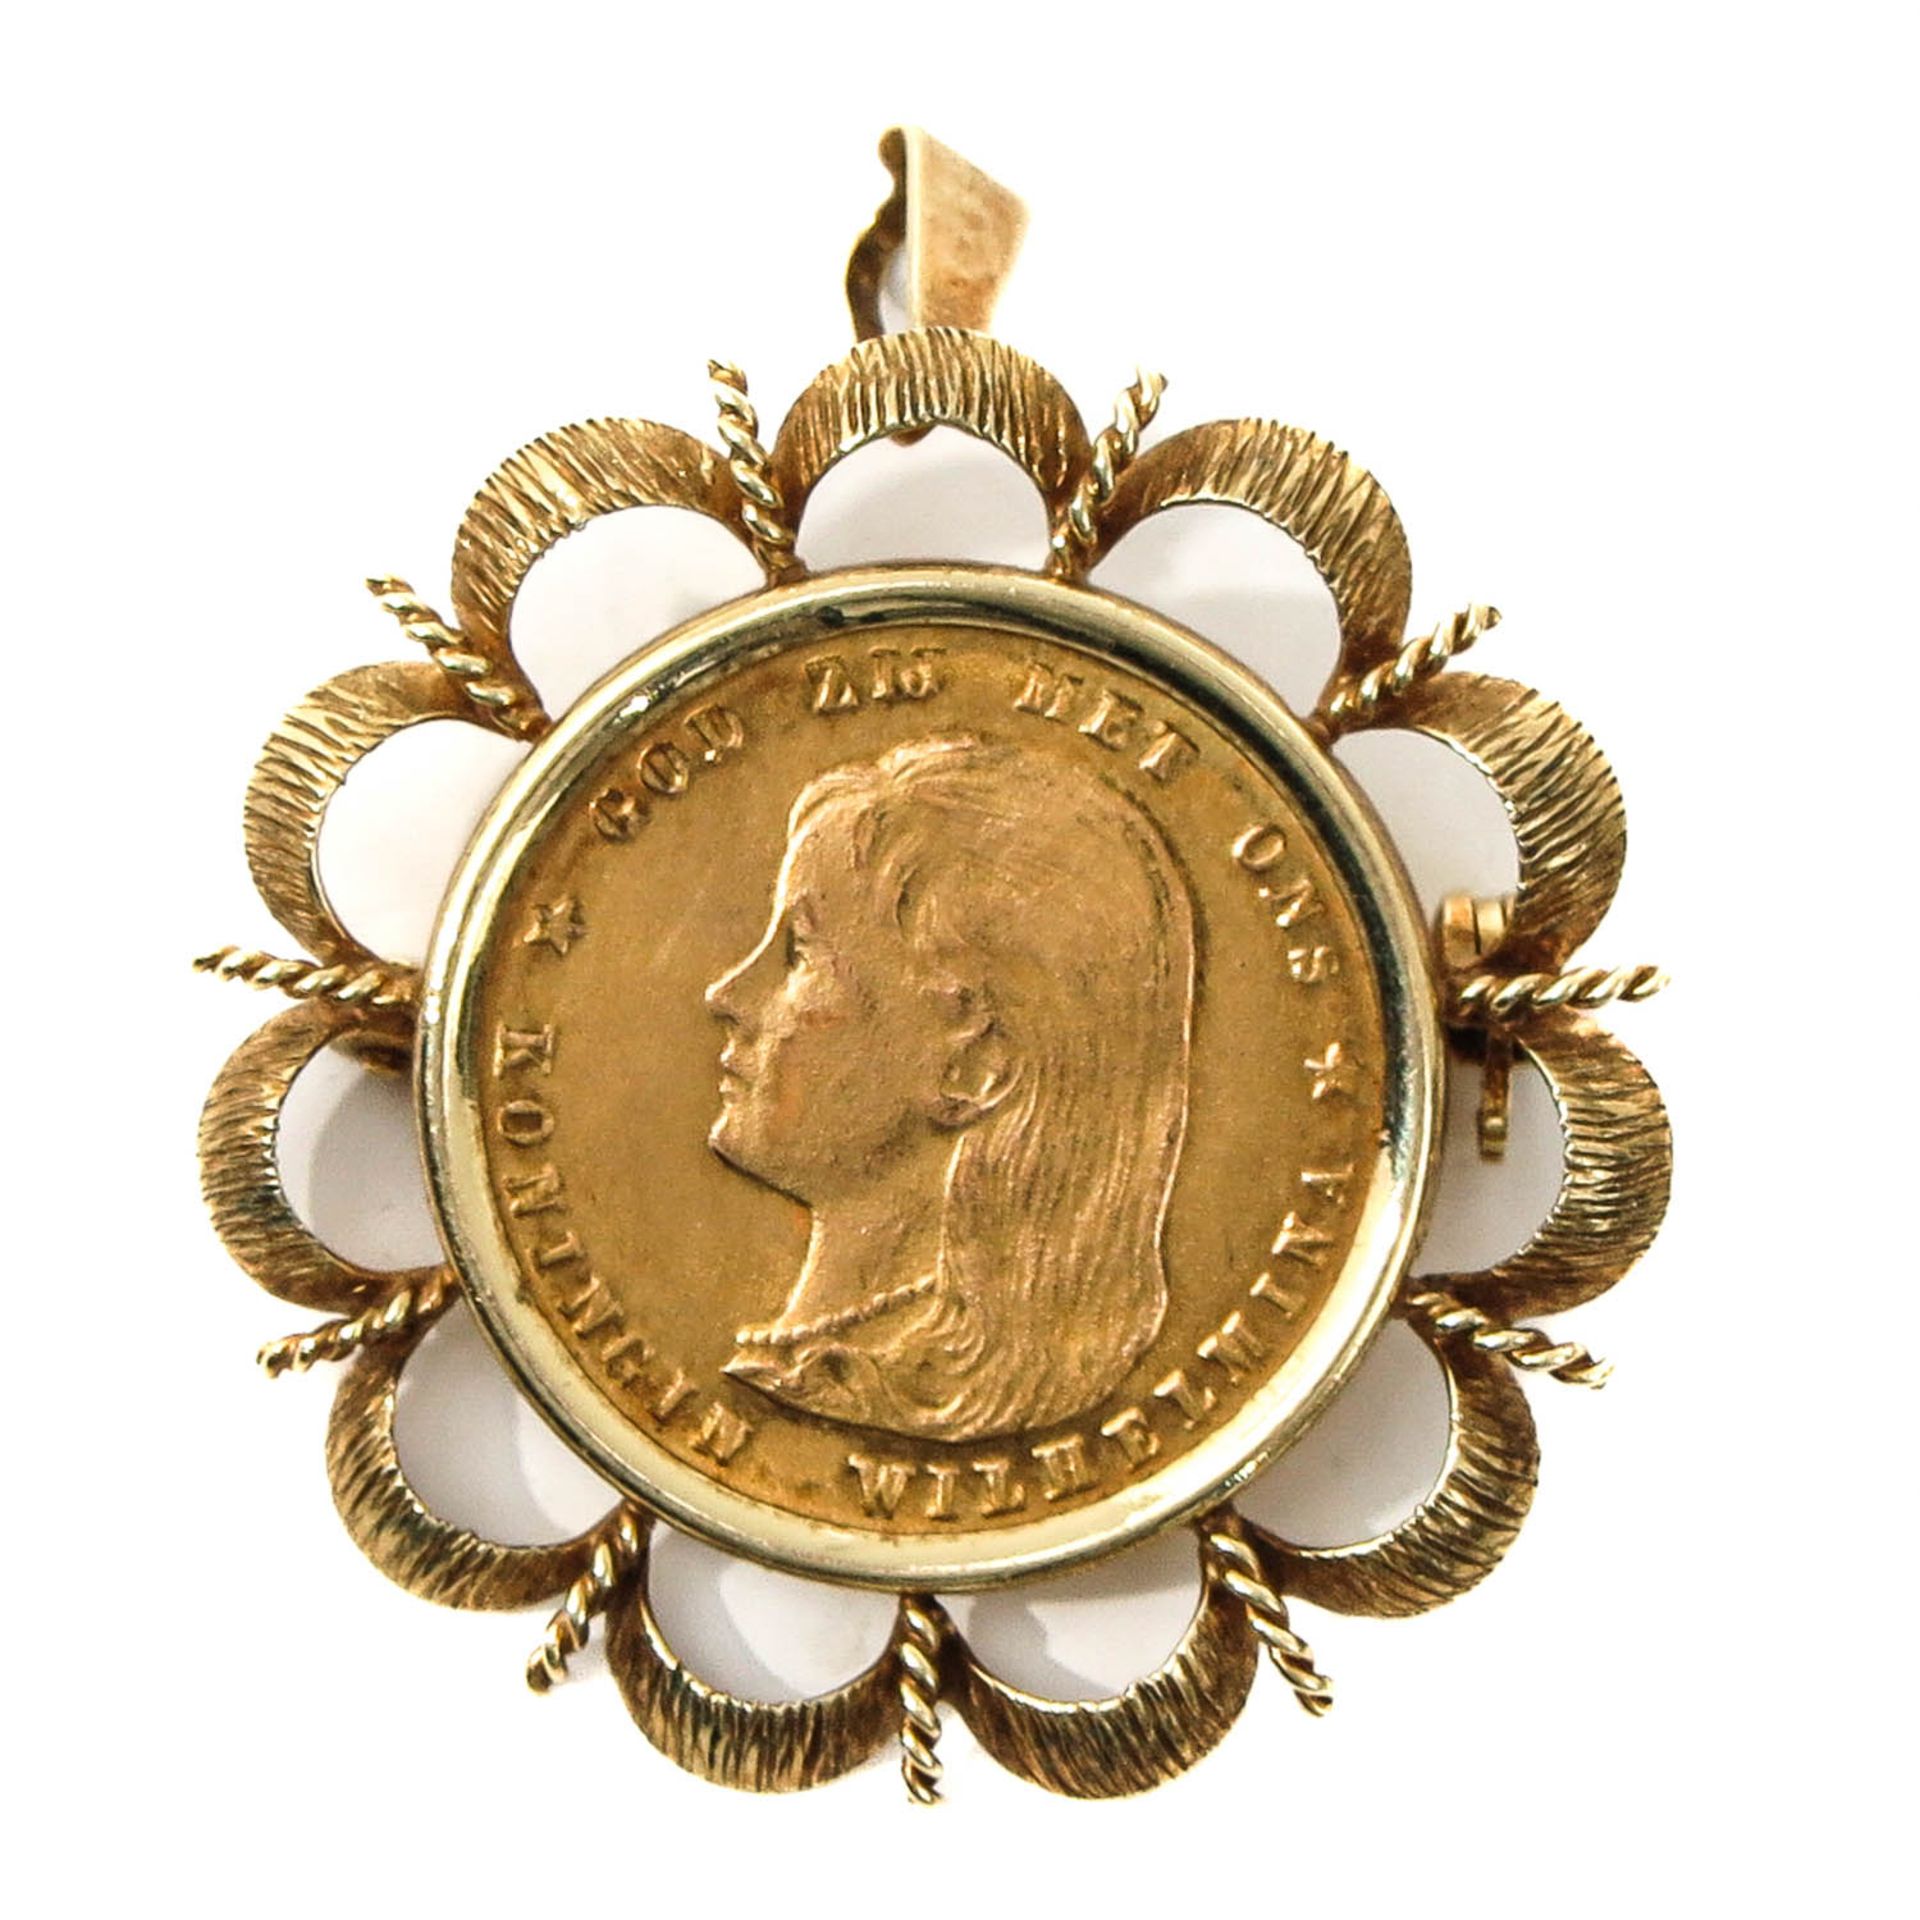 A 10 Guilder Gold Coin Brooch